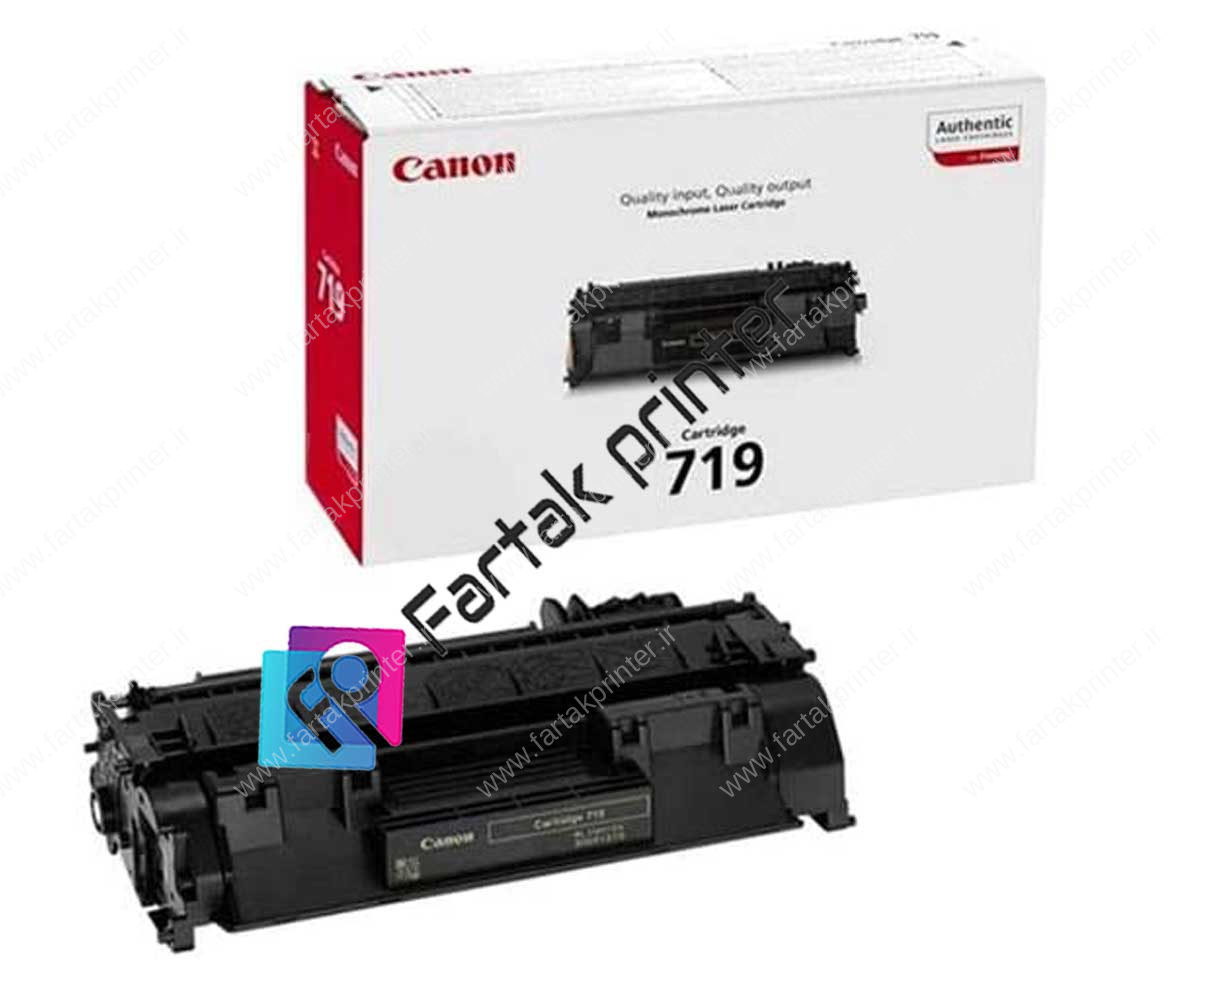 Canon 719 Black Laser Toner Cartridge